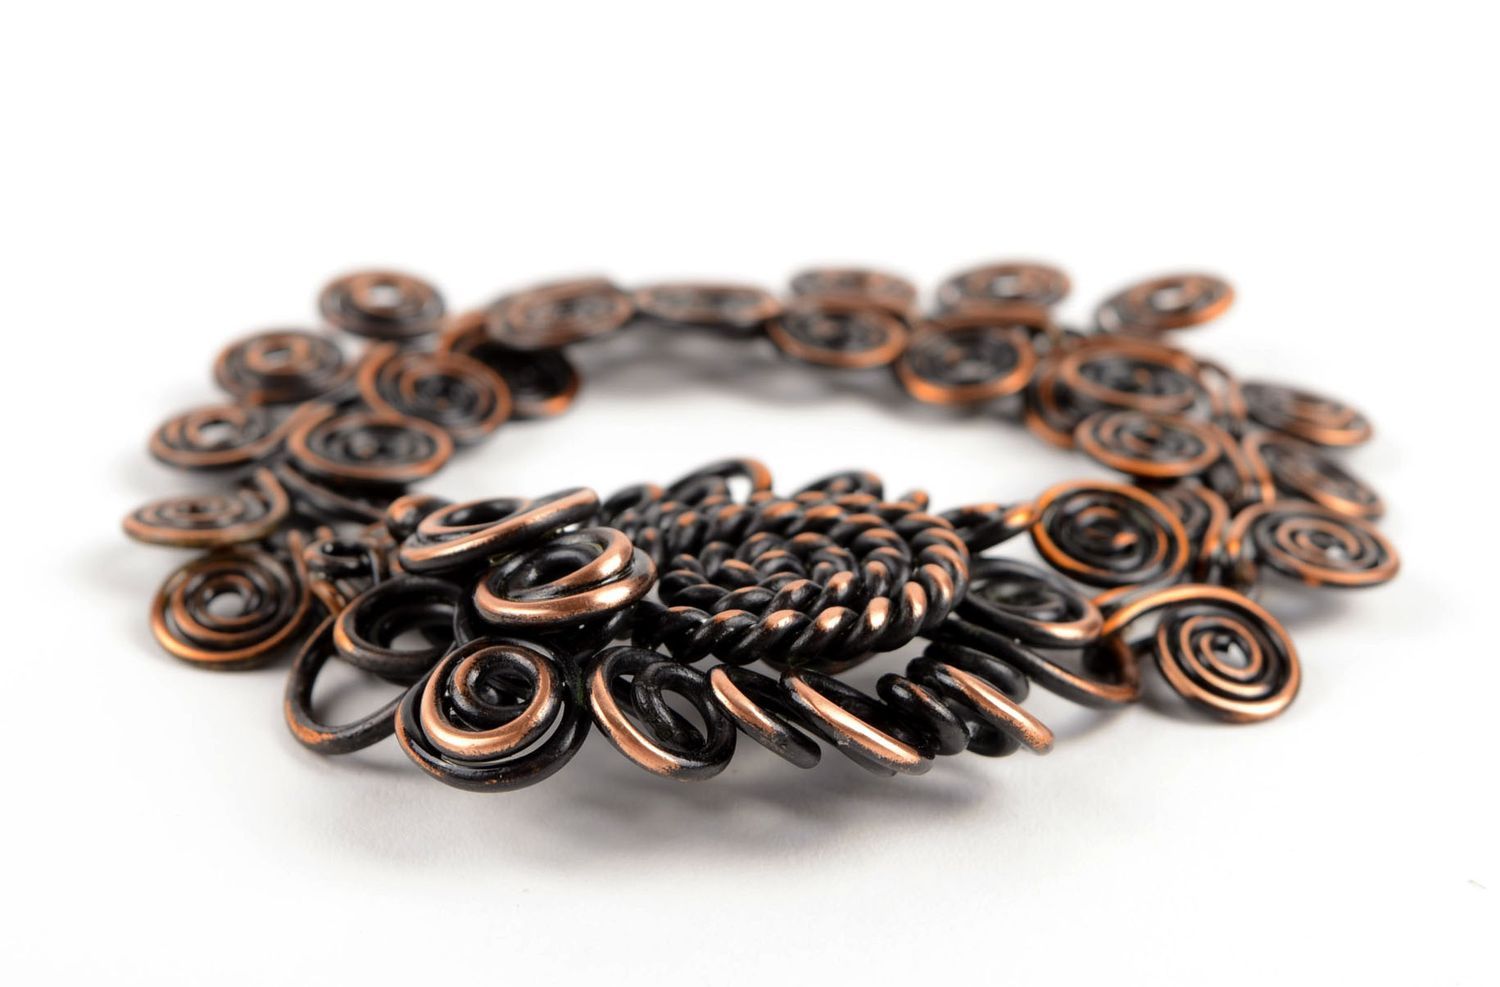 Handcrafted jewelry metal bracelet wrist bracelet designer jewelry gift for her photo 3